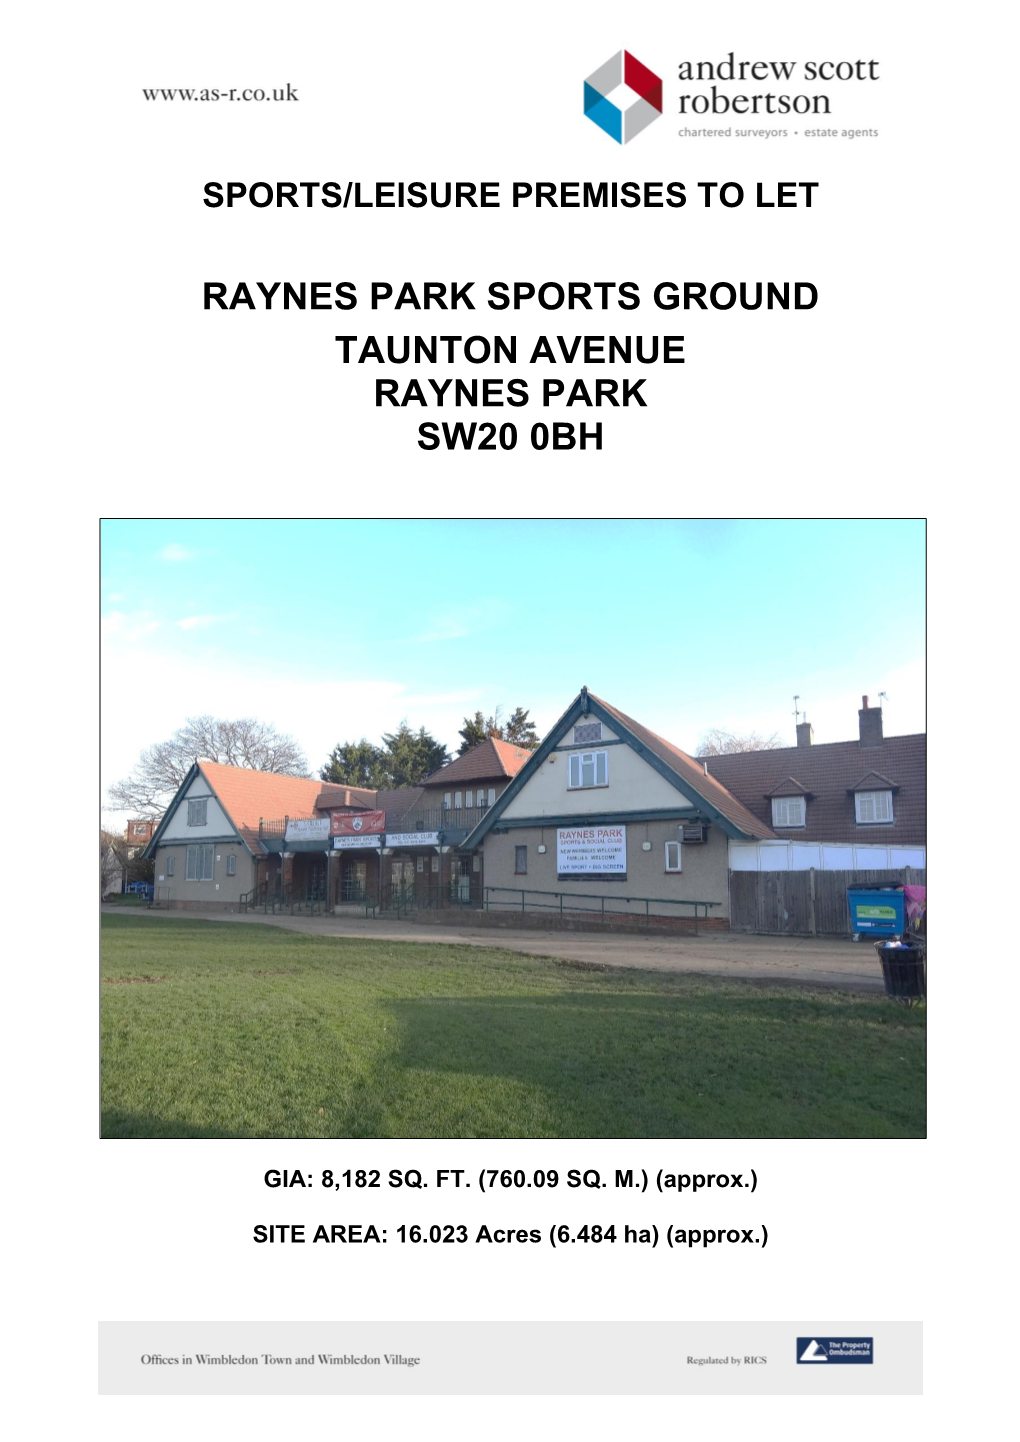 Raynes Park Sports Ground, SW20